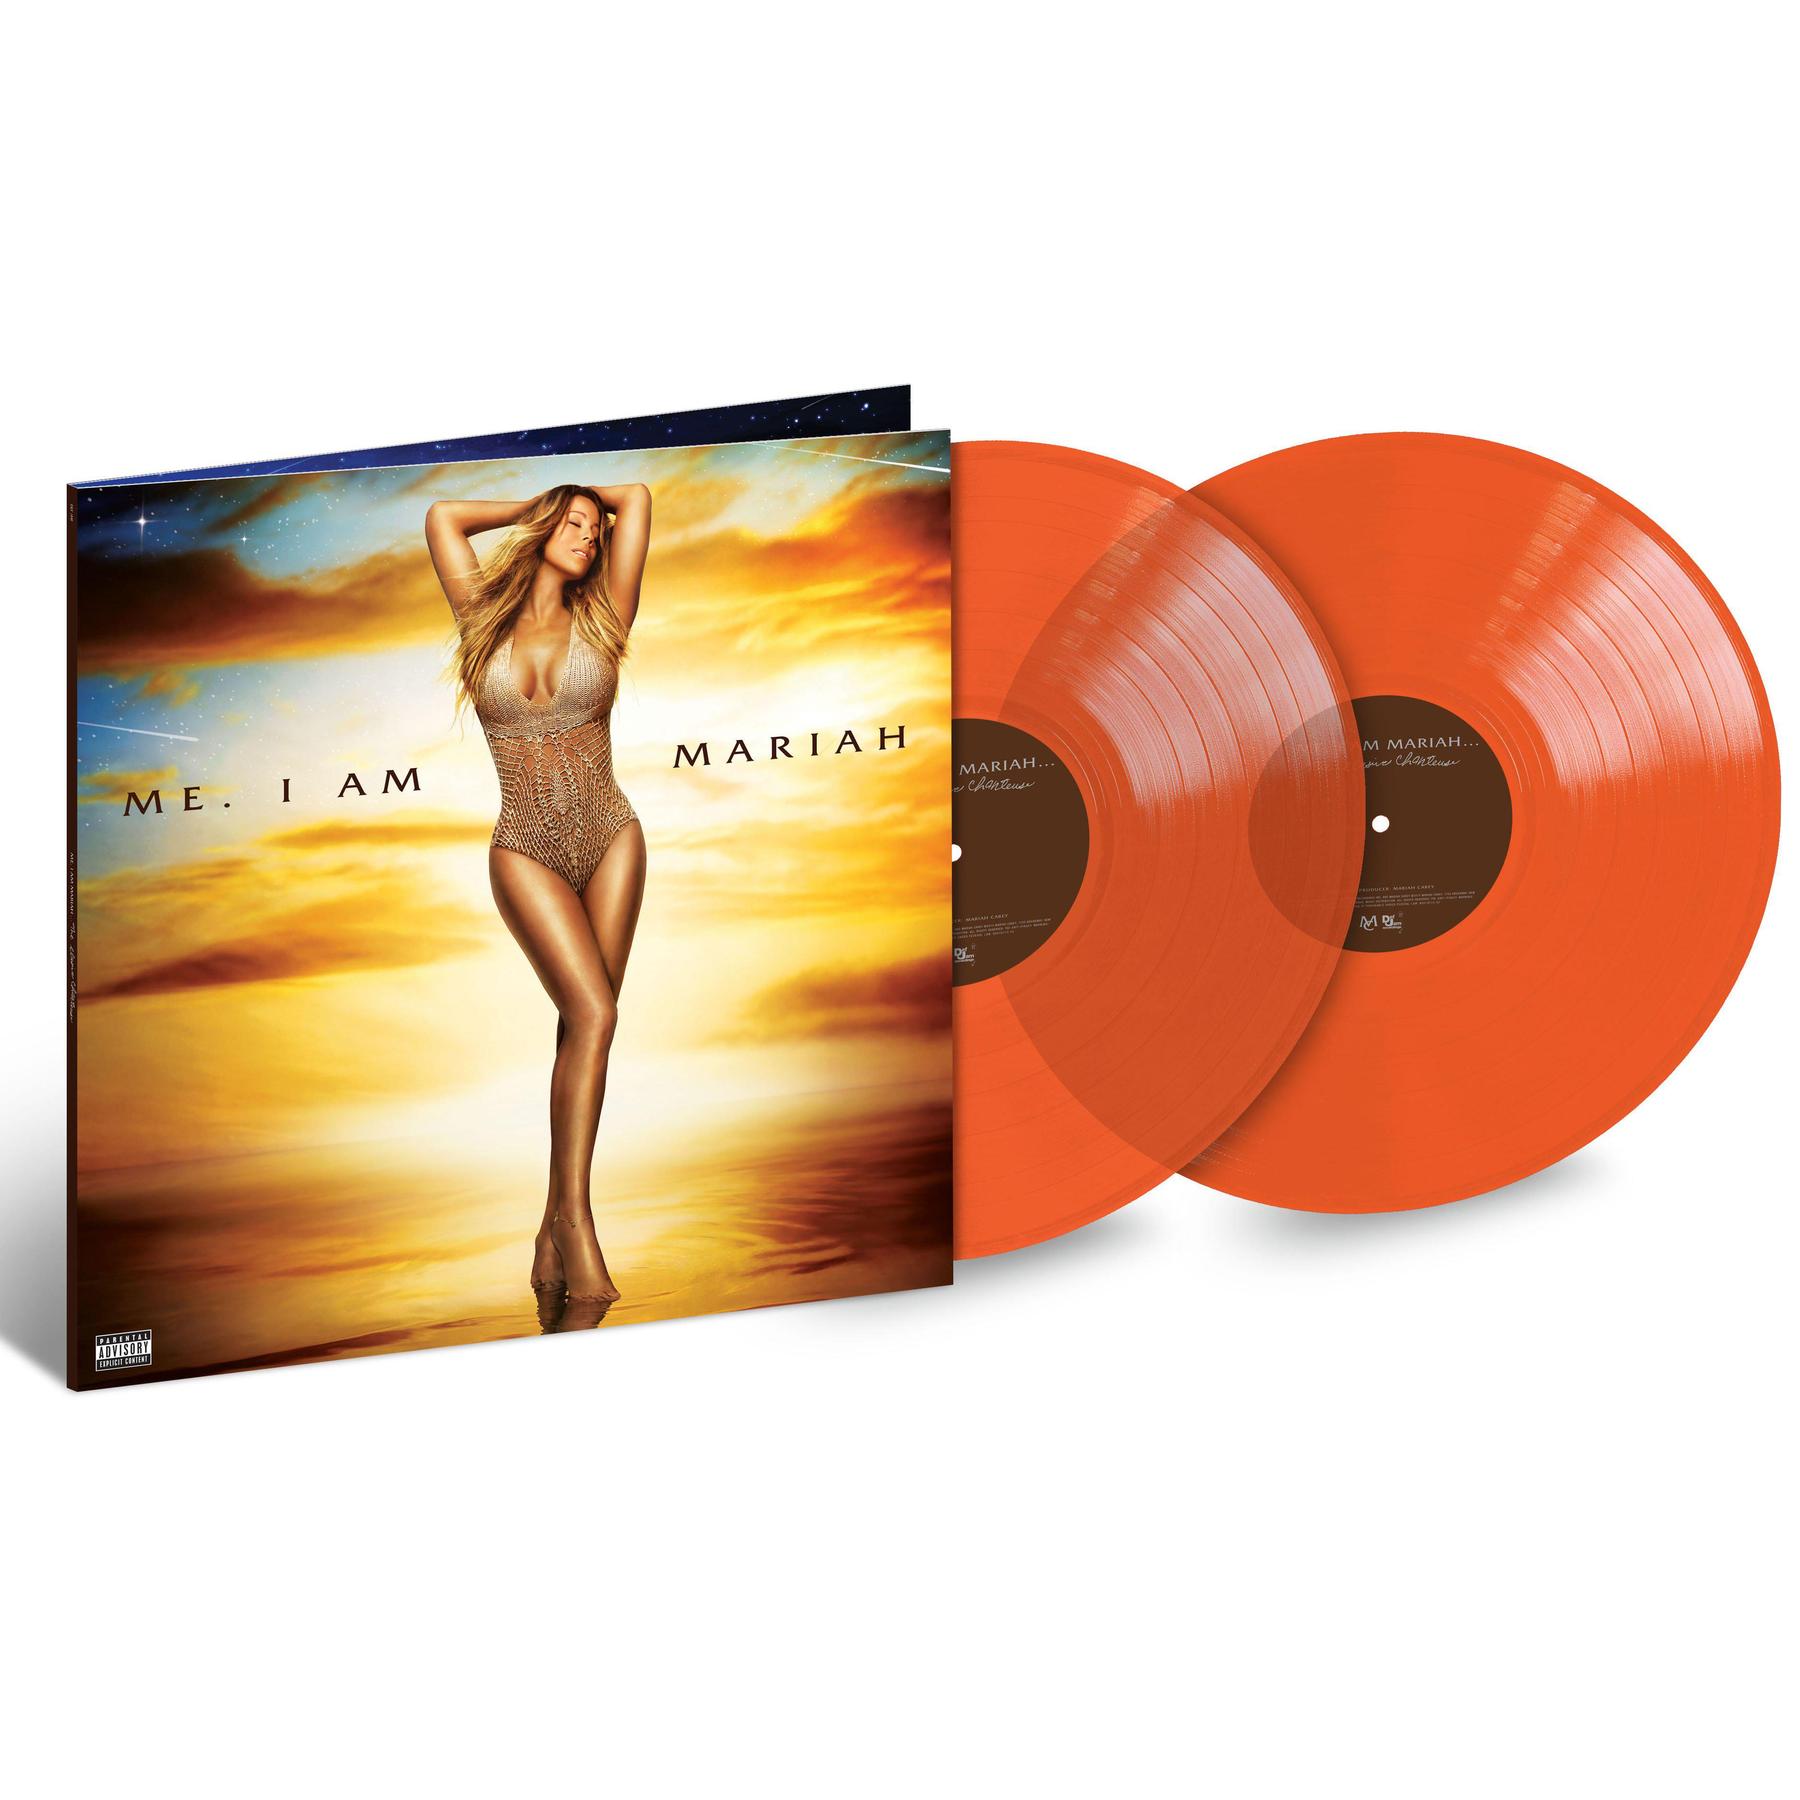 Mariah Carey - Me.I am Mariah The Elusive Chanteuse Limited Edition Translucent Orange Vinyl 2LP